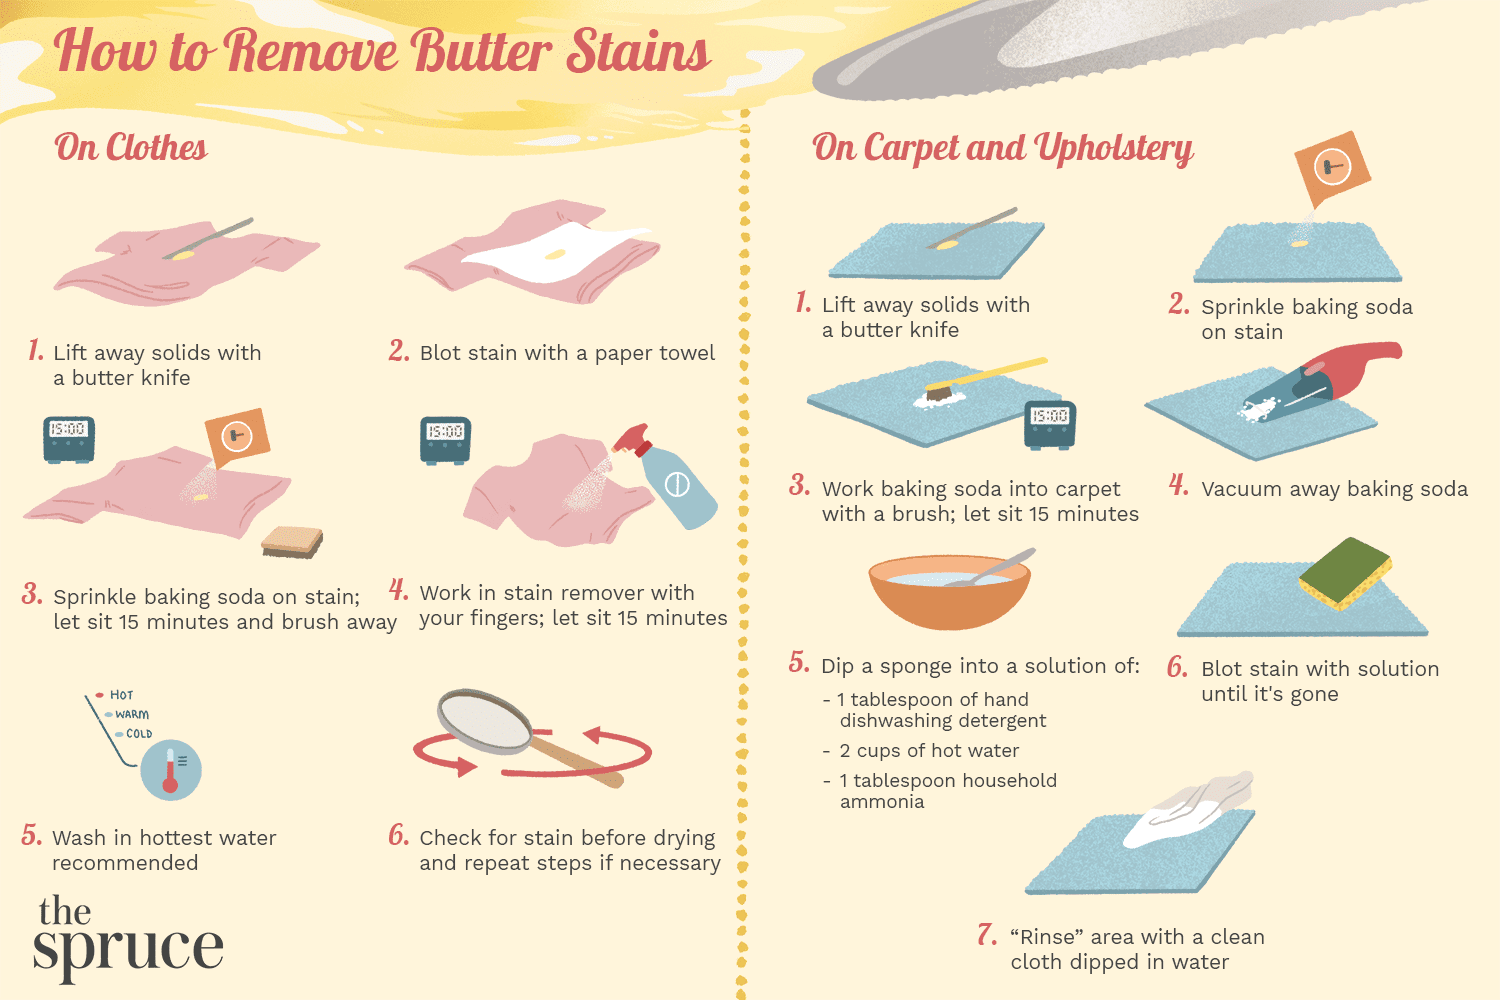 Wie man Butter endgültig aus der Kleidung bekommt